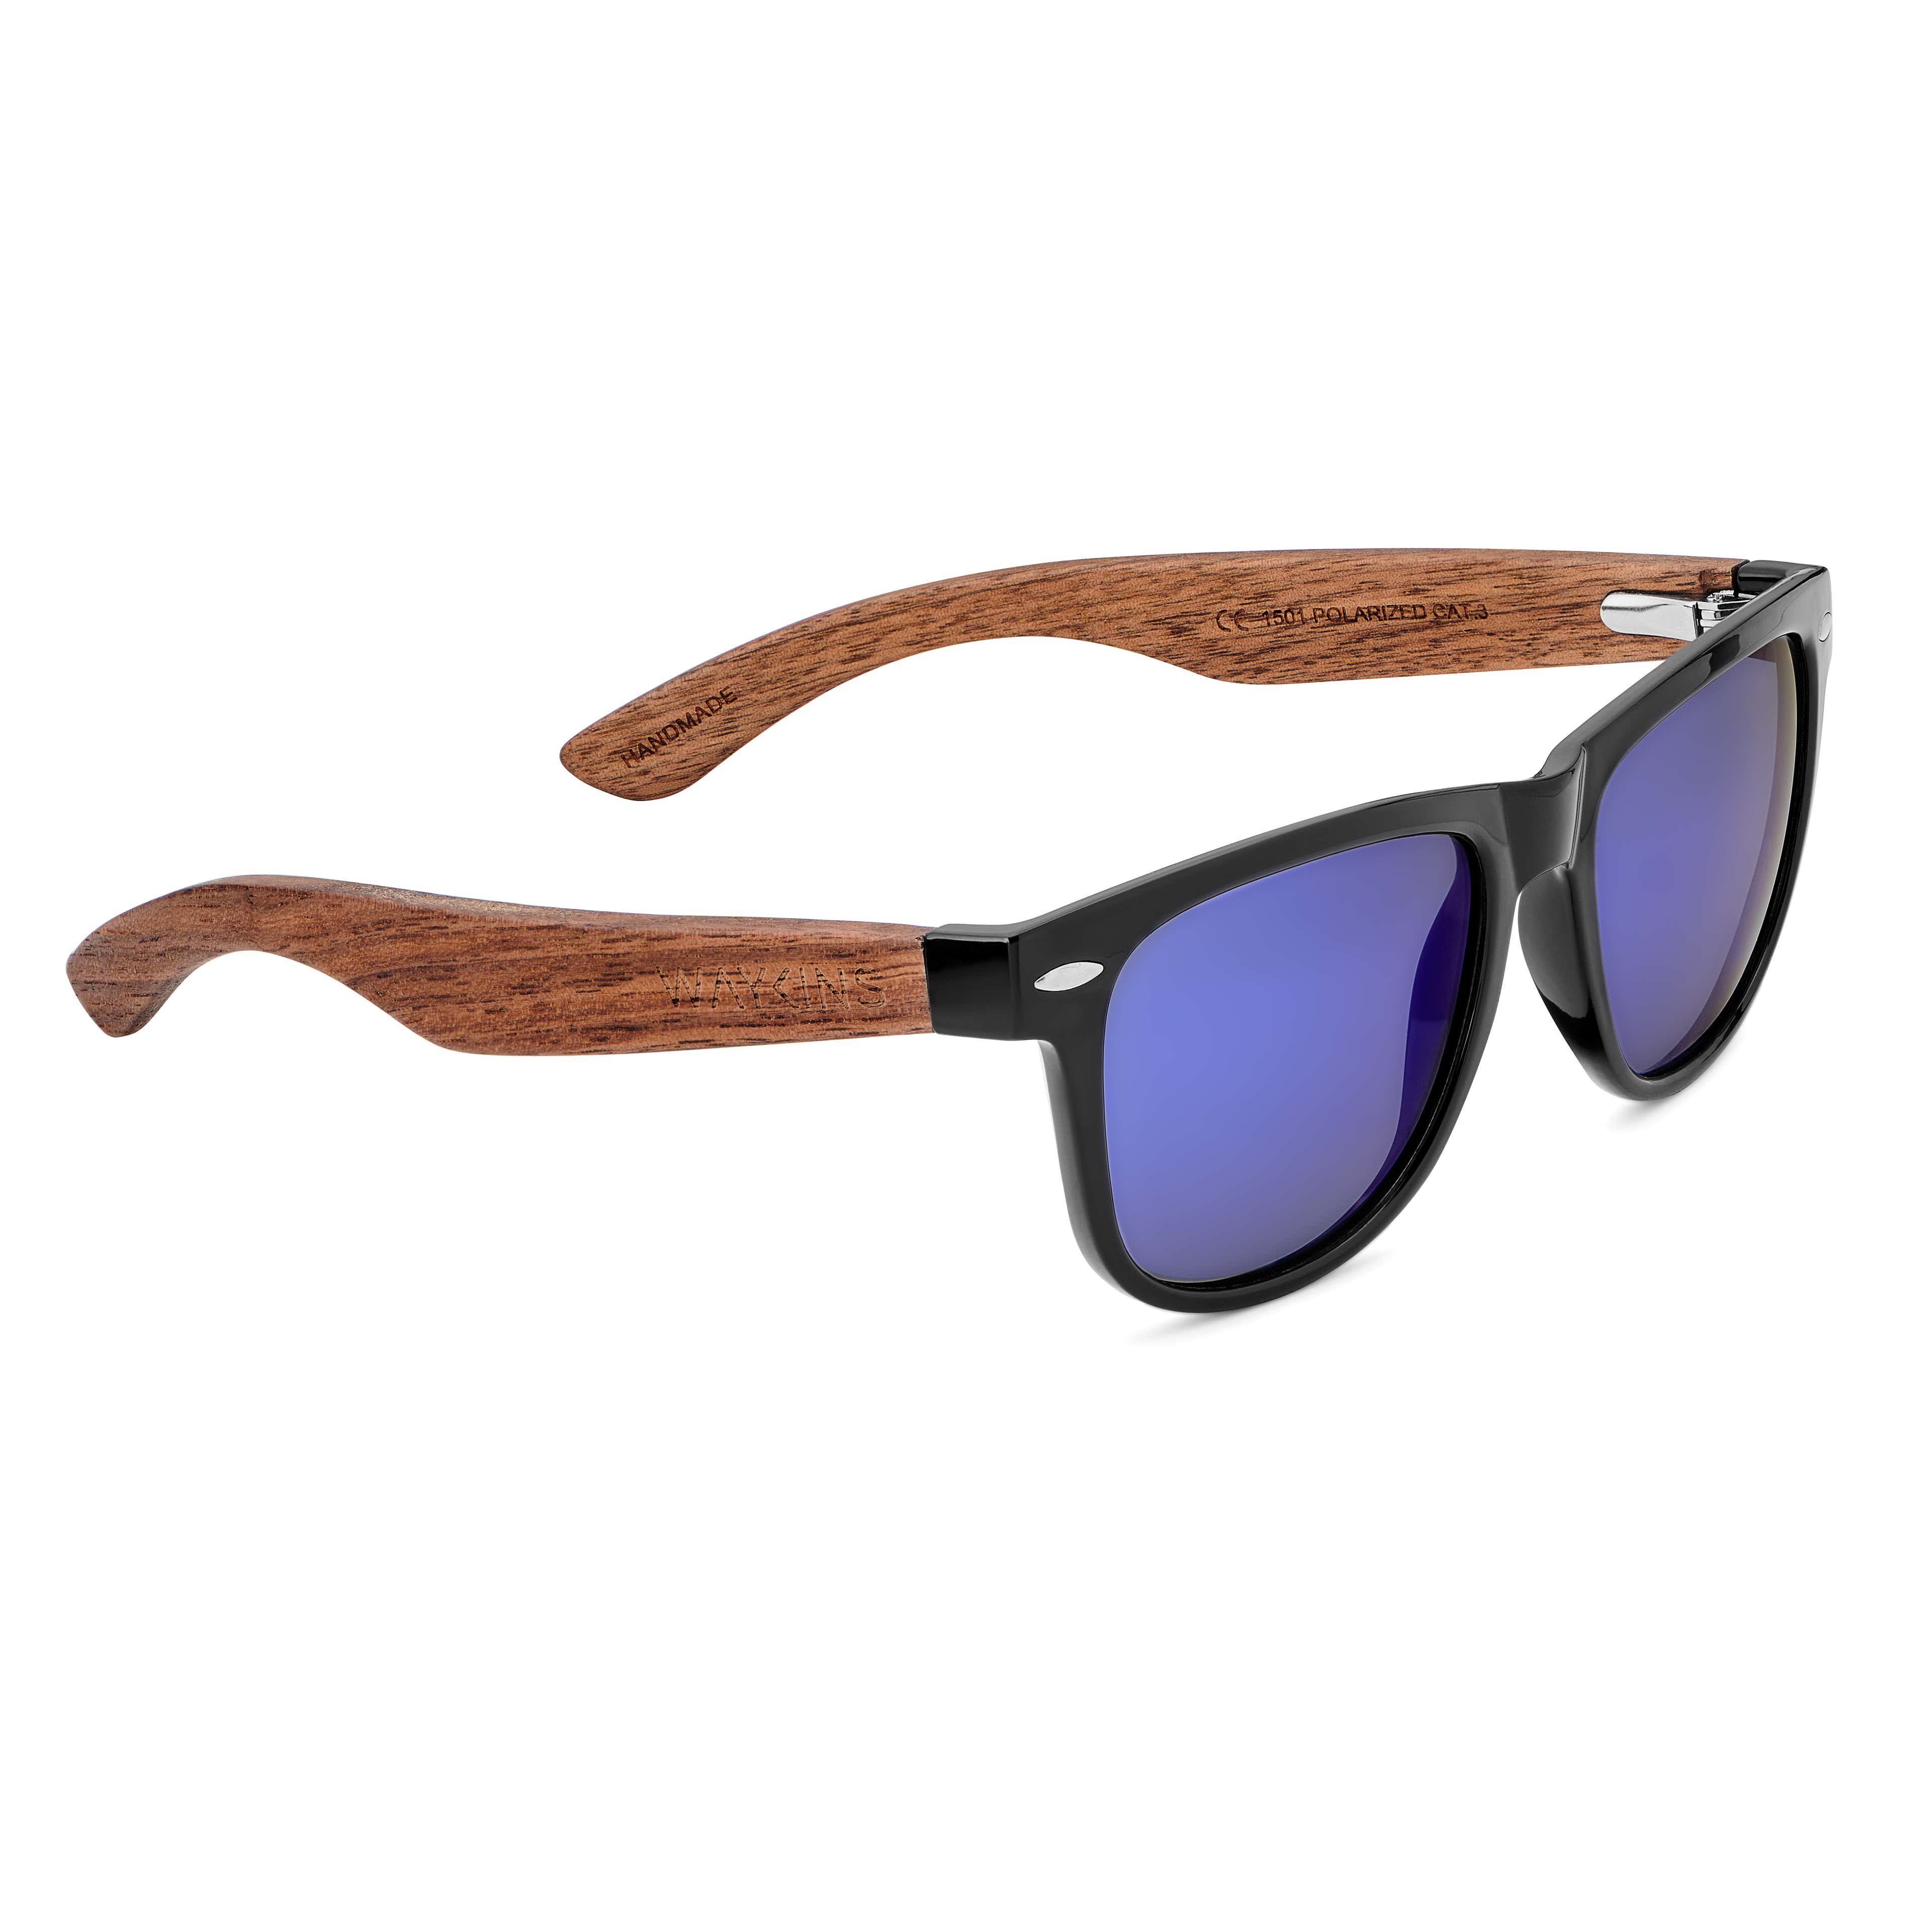 Black & Blue Retro Polarised Sunglasses With Wood Temples - 3 - gallery